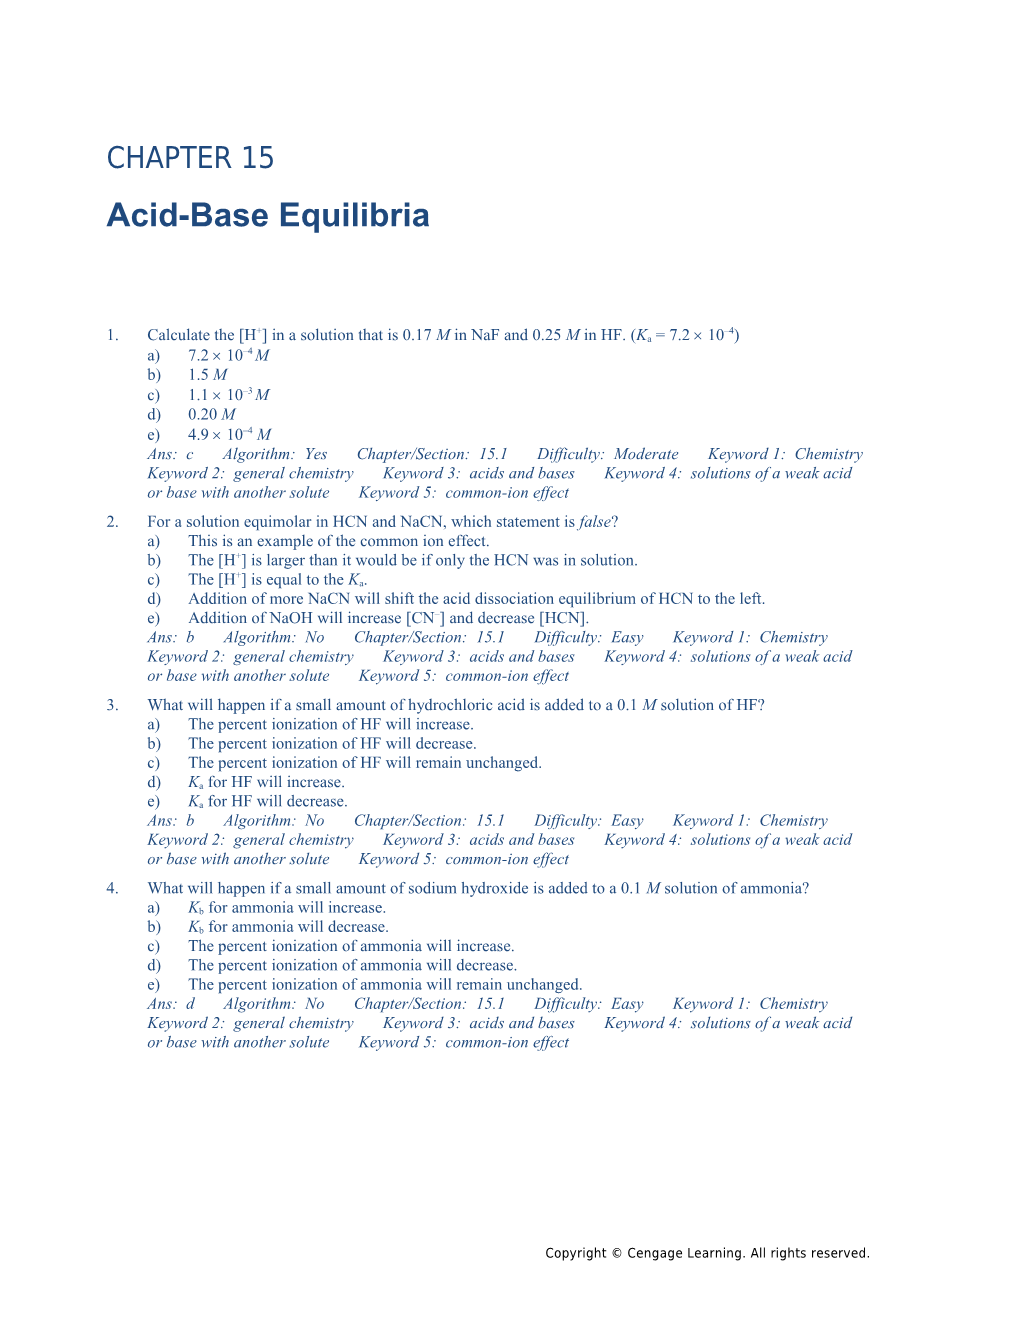 Chapter 15: Acid-Base Equilibria 397